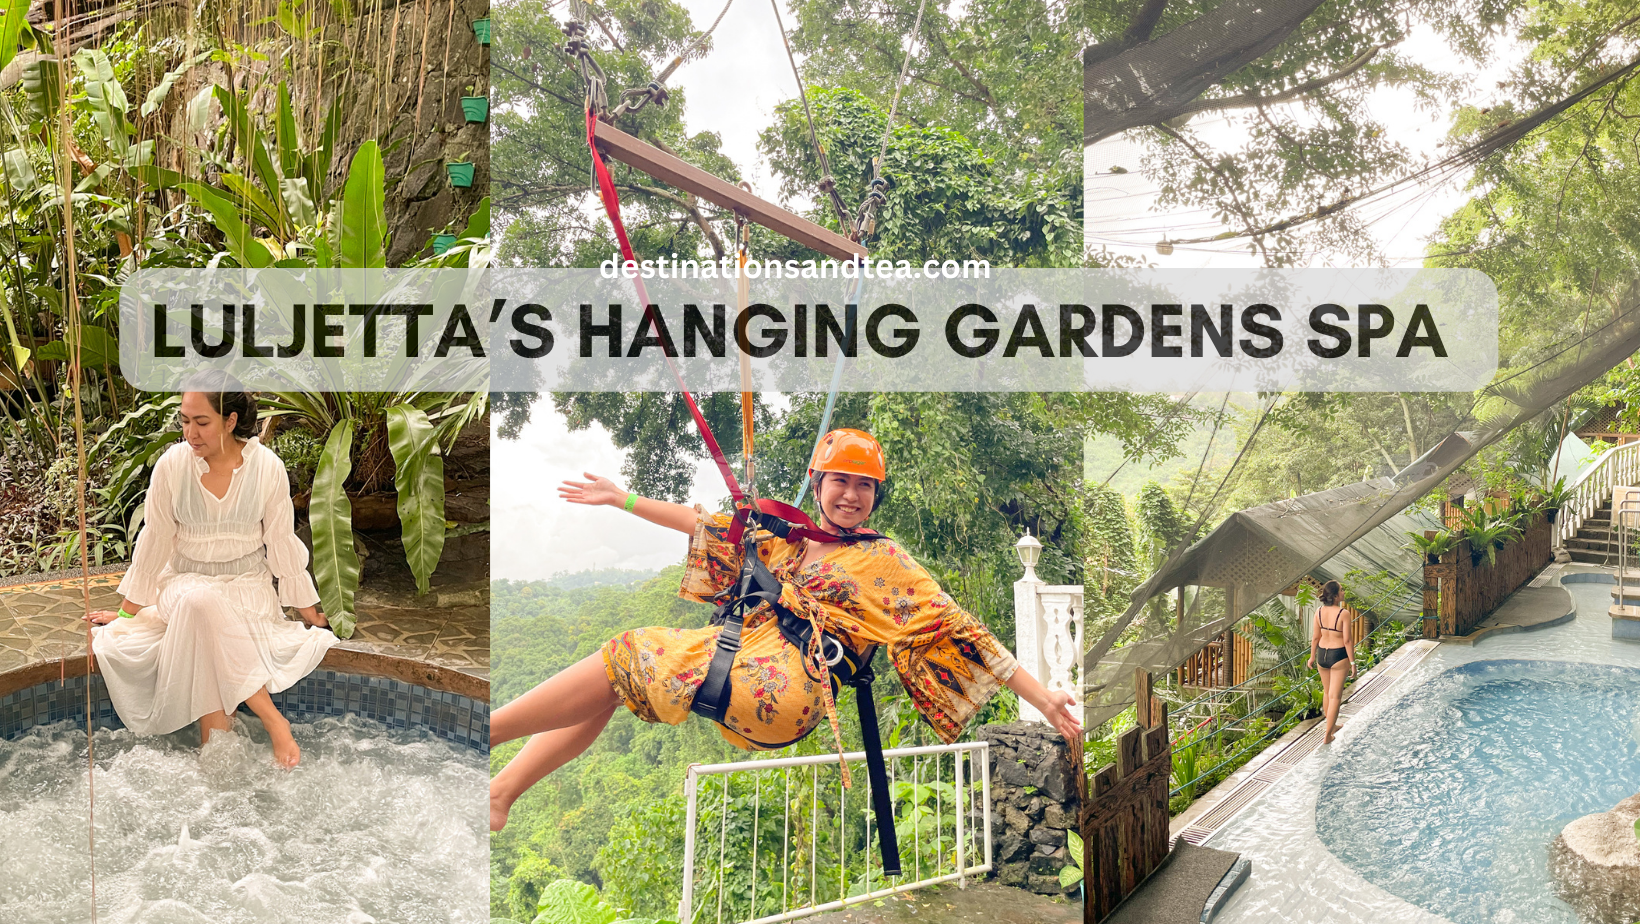 Luljettas’s Hanging Gardens Spa: Getaway For As Low as P1399